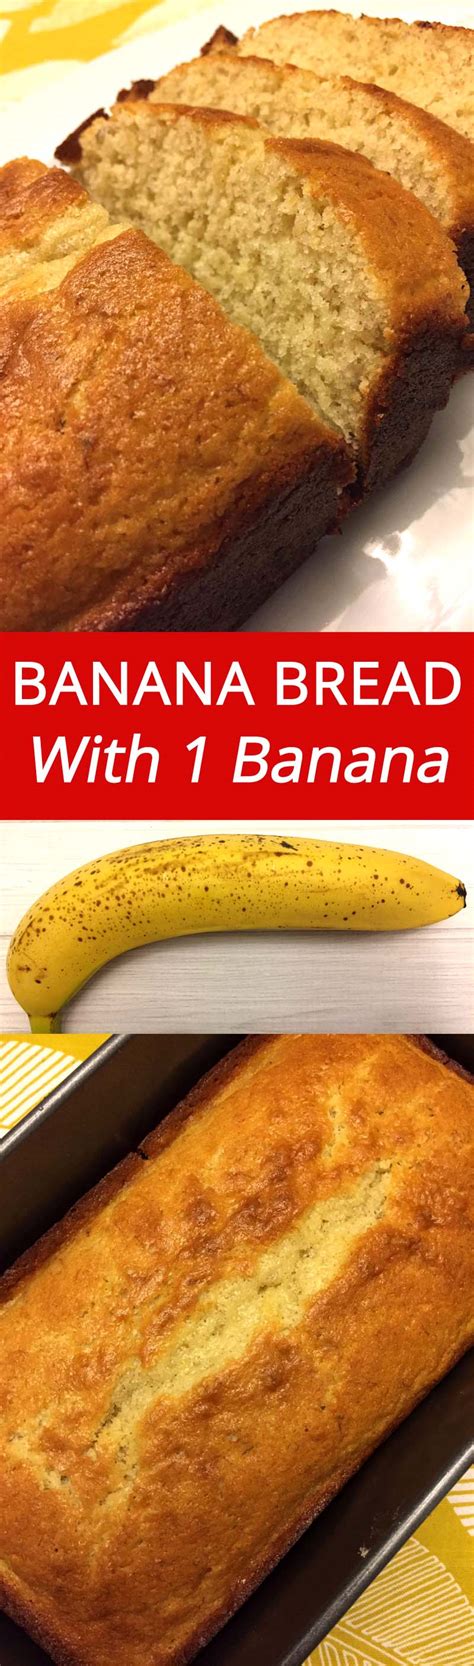 Here are some healthy banana bread recipes from ak: Banana Bread Recipe With One Banana - Melanie Cooks